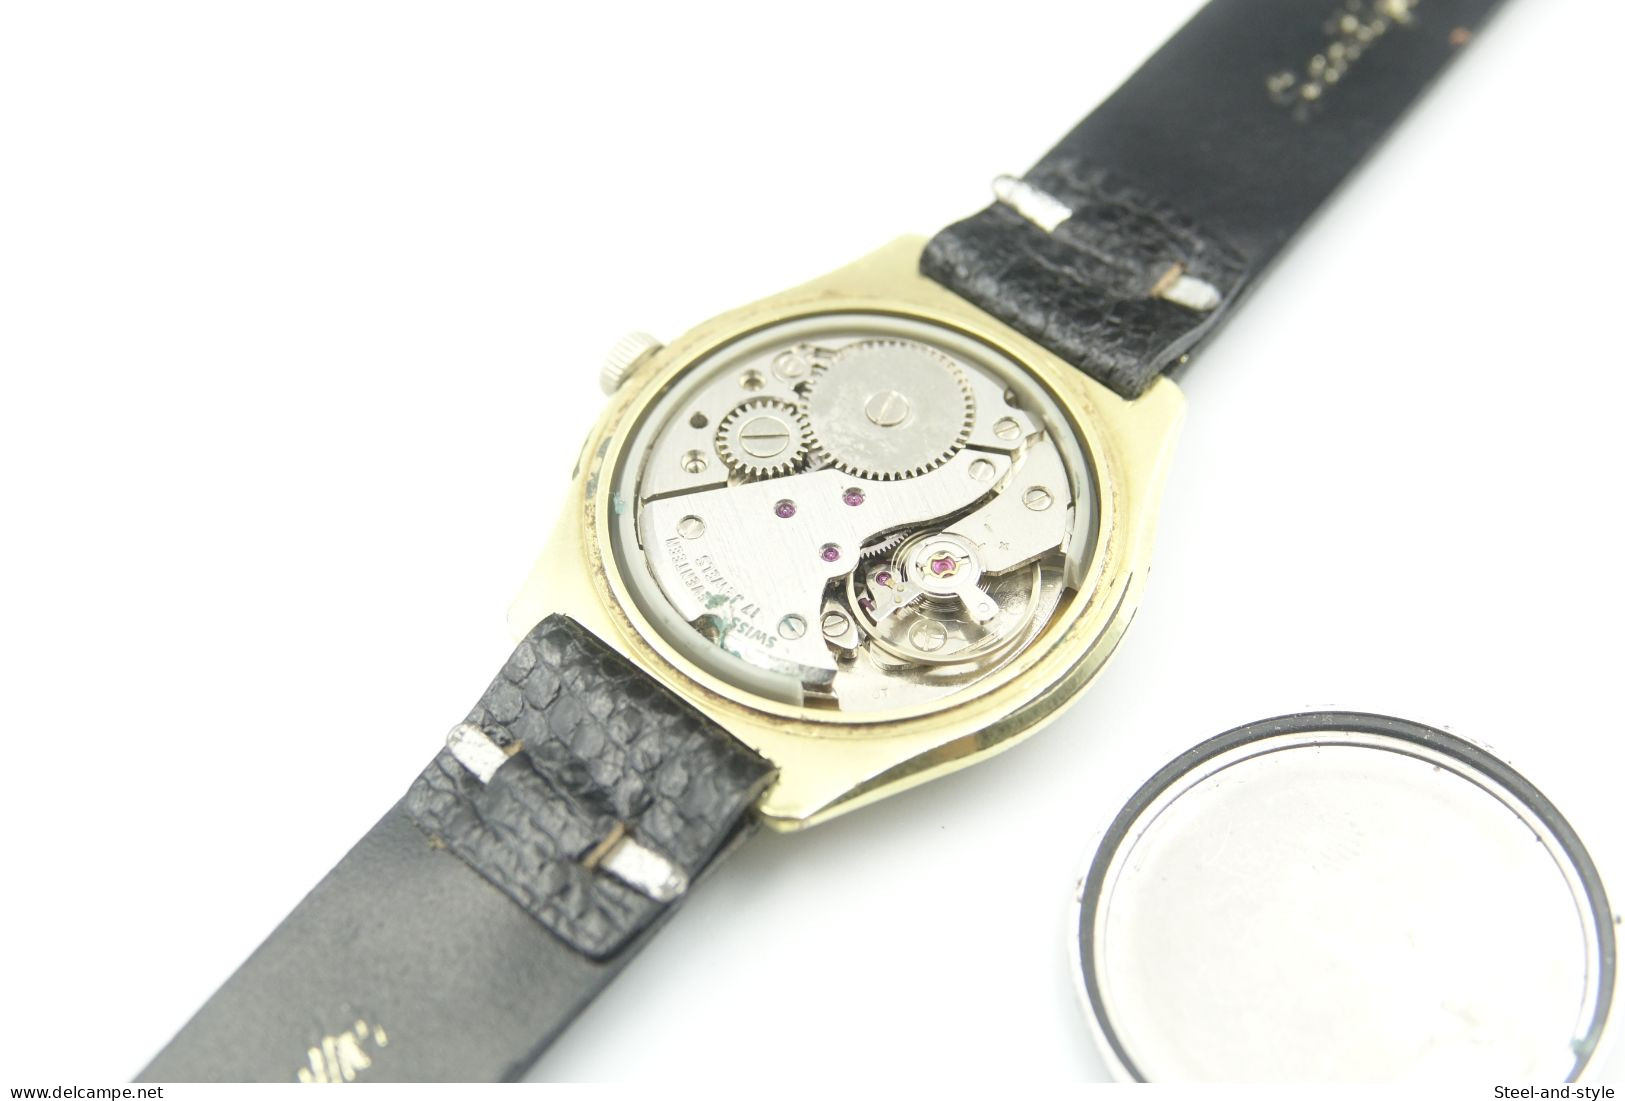 watches : VERDAL 17 JEWELS INCABLOC HANDWIND - original - running - 1960s